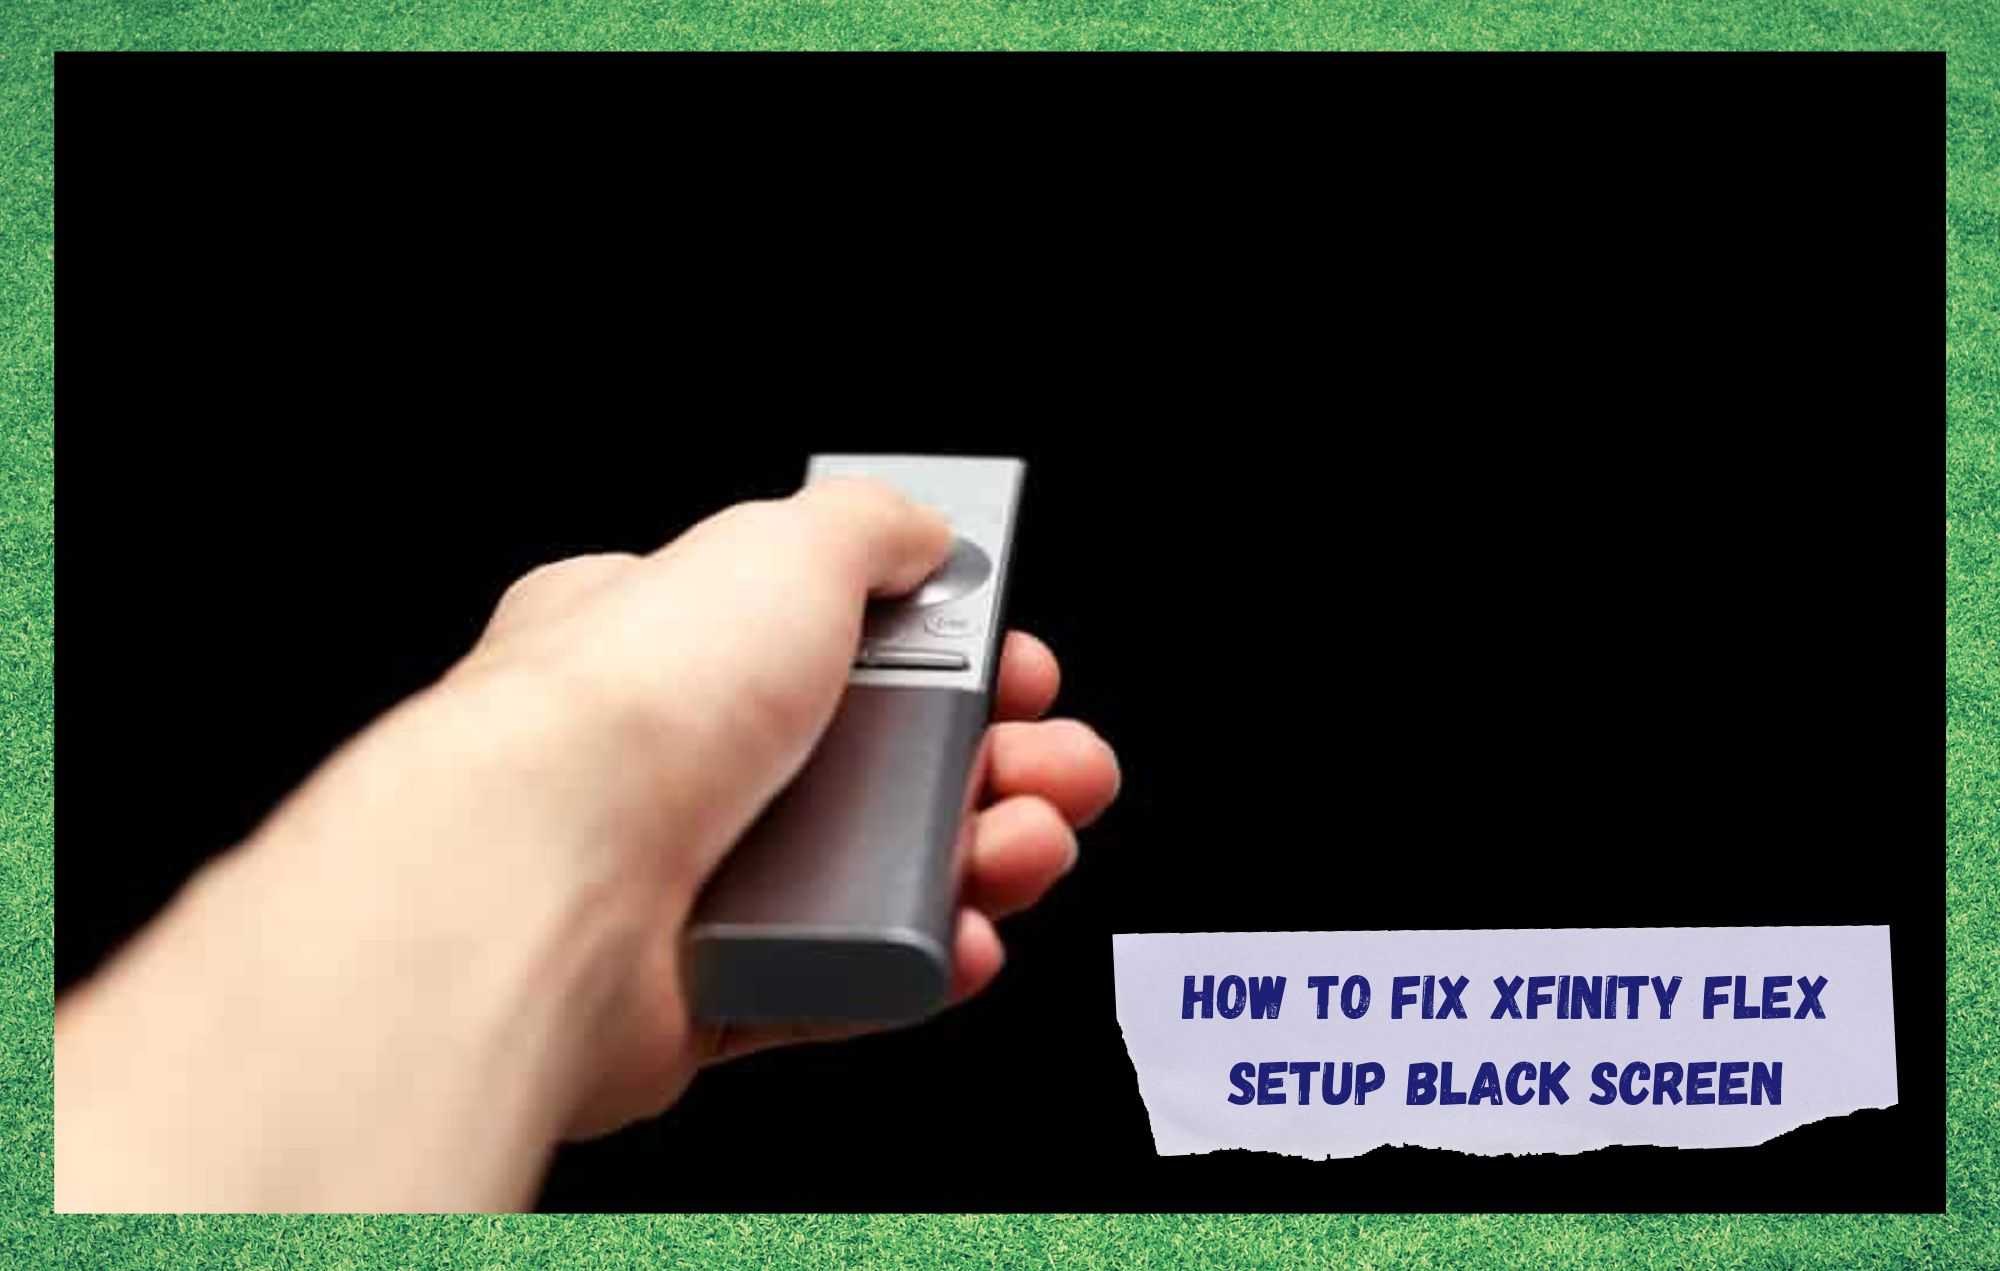 xfinity flex setup black screenxfinity flex setup black screen